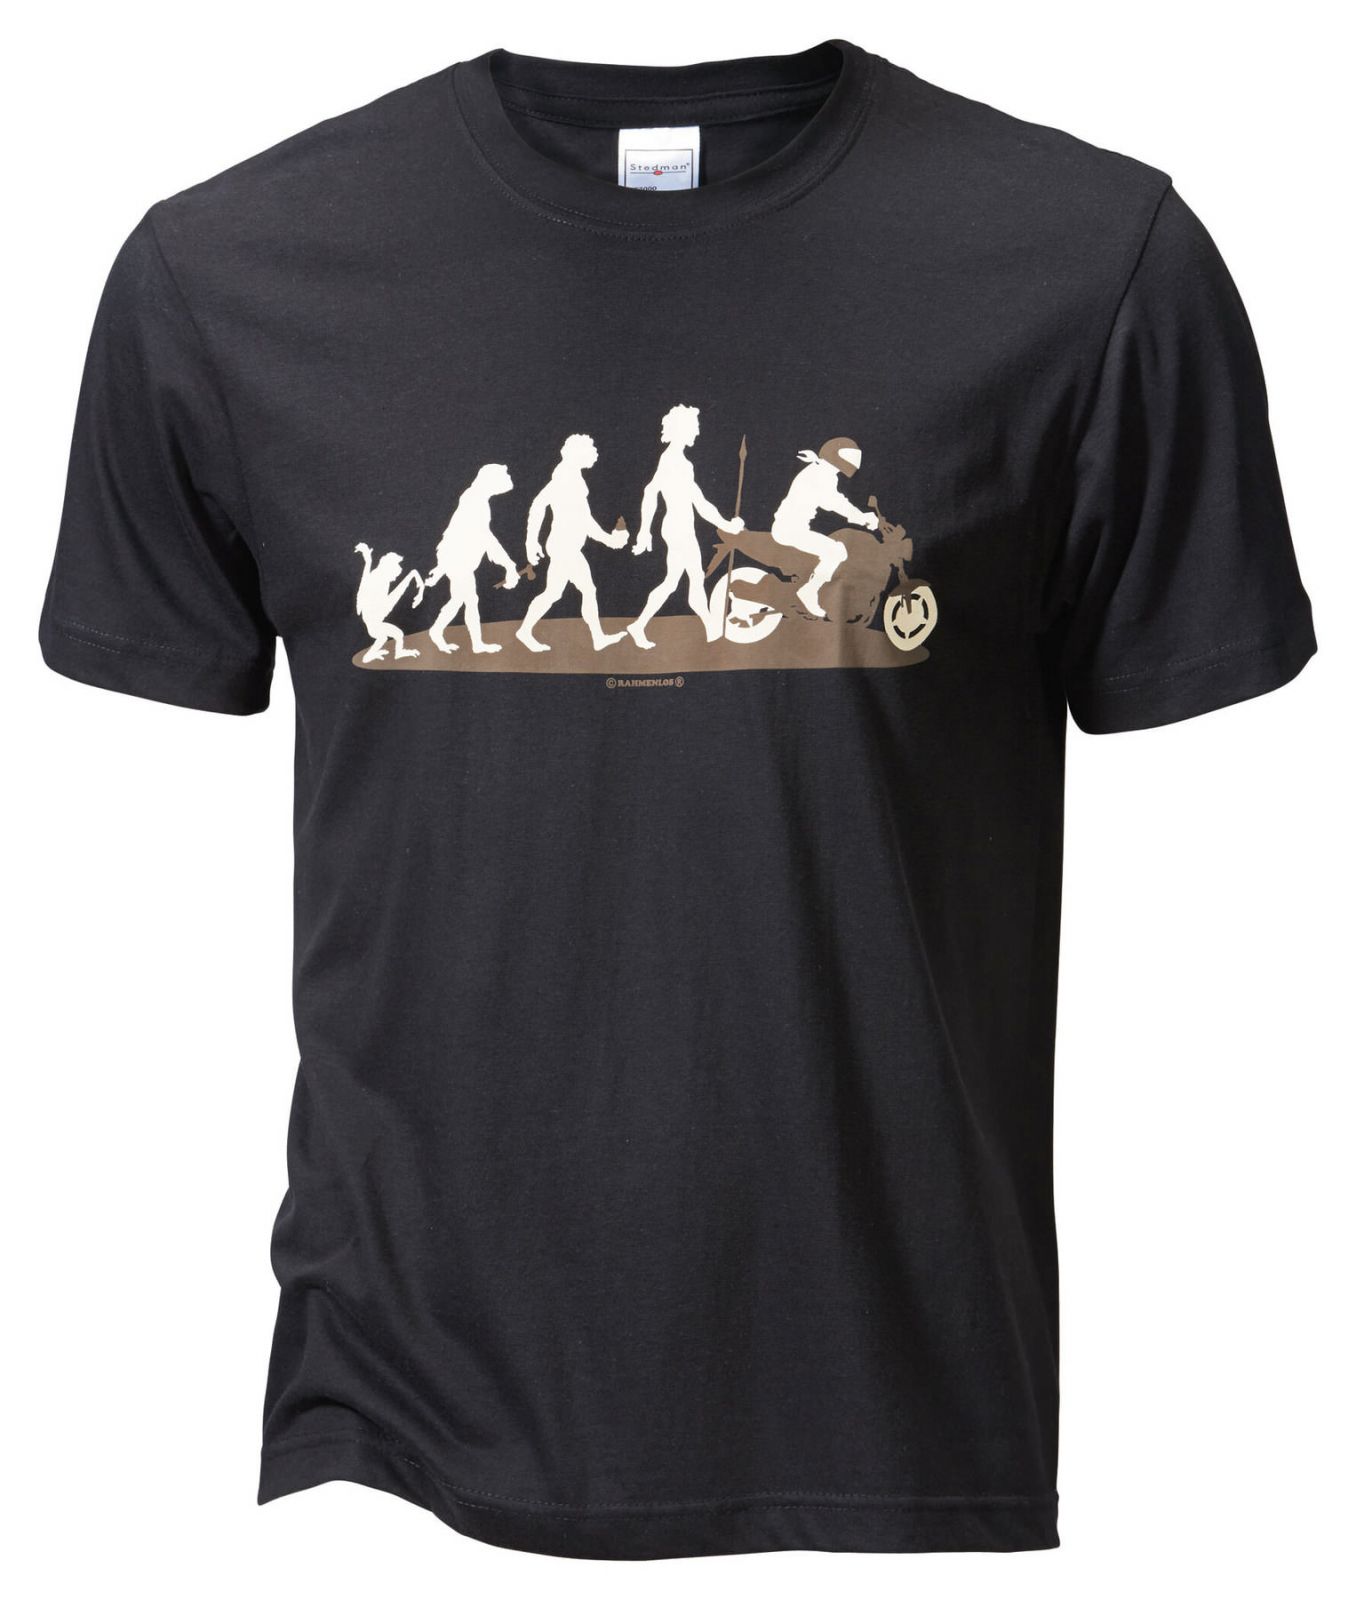 Pánské tričko EVOLUTION čierne Rahmenlos